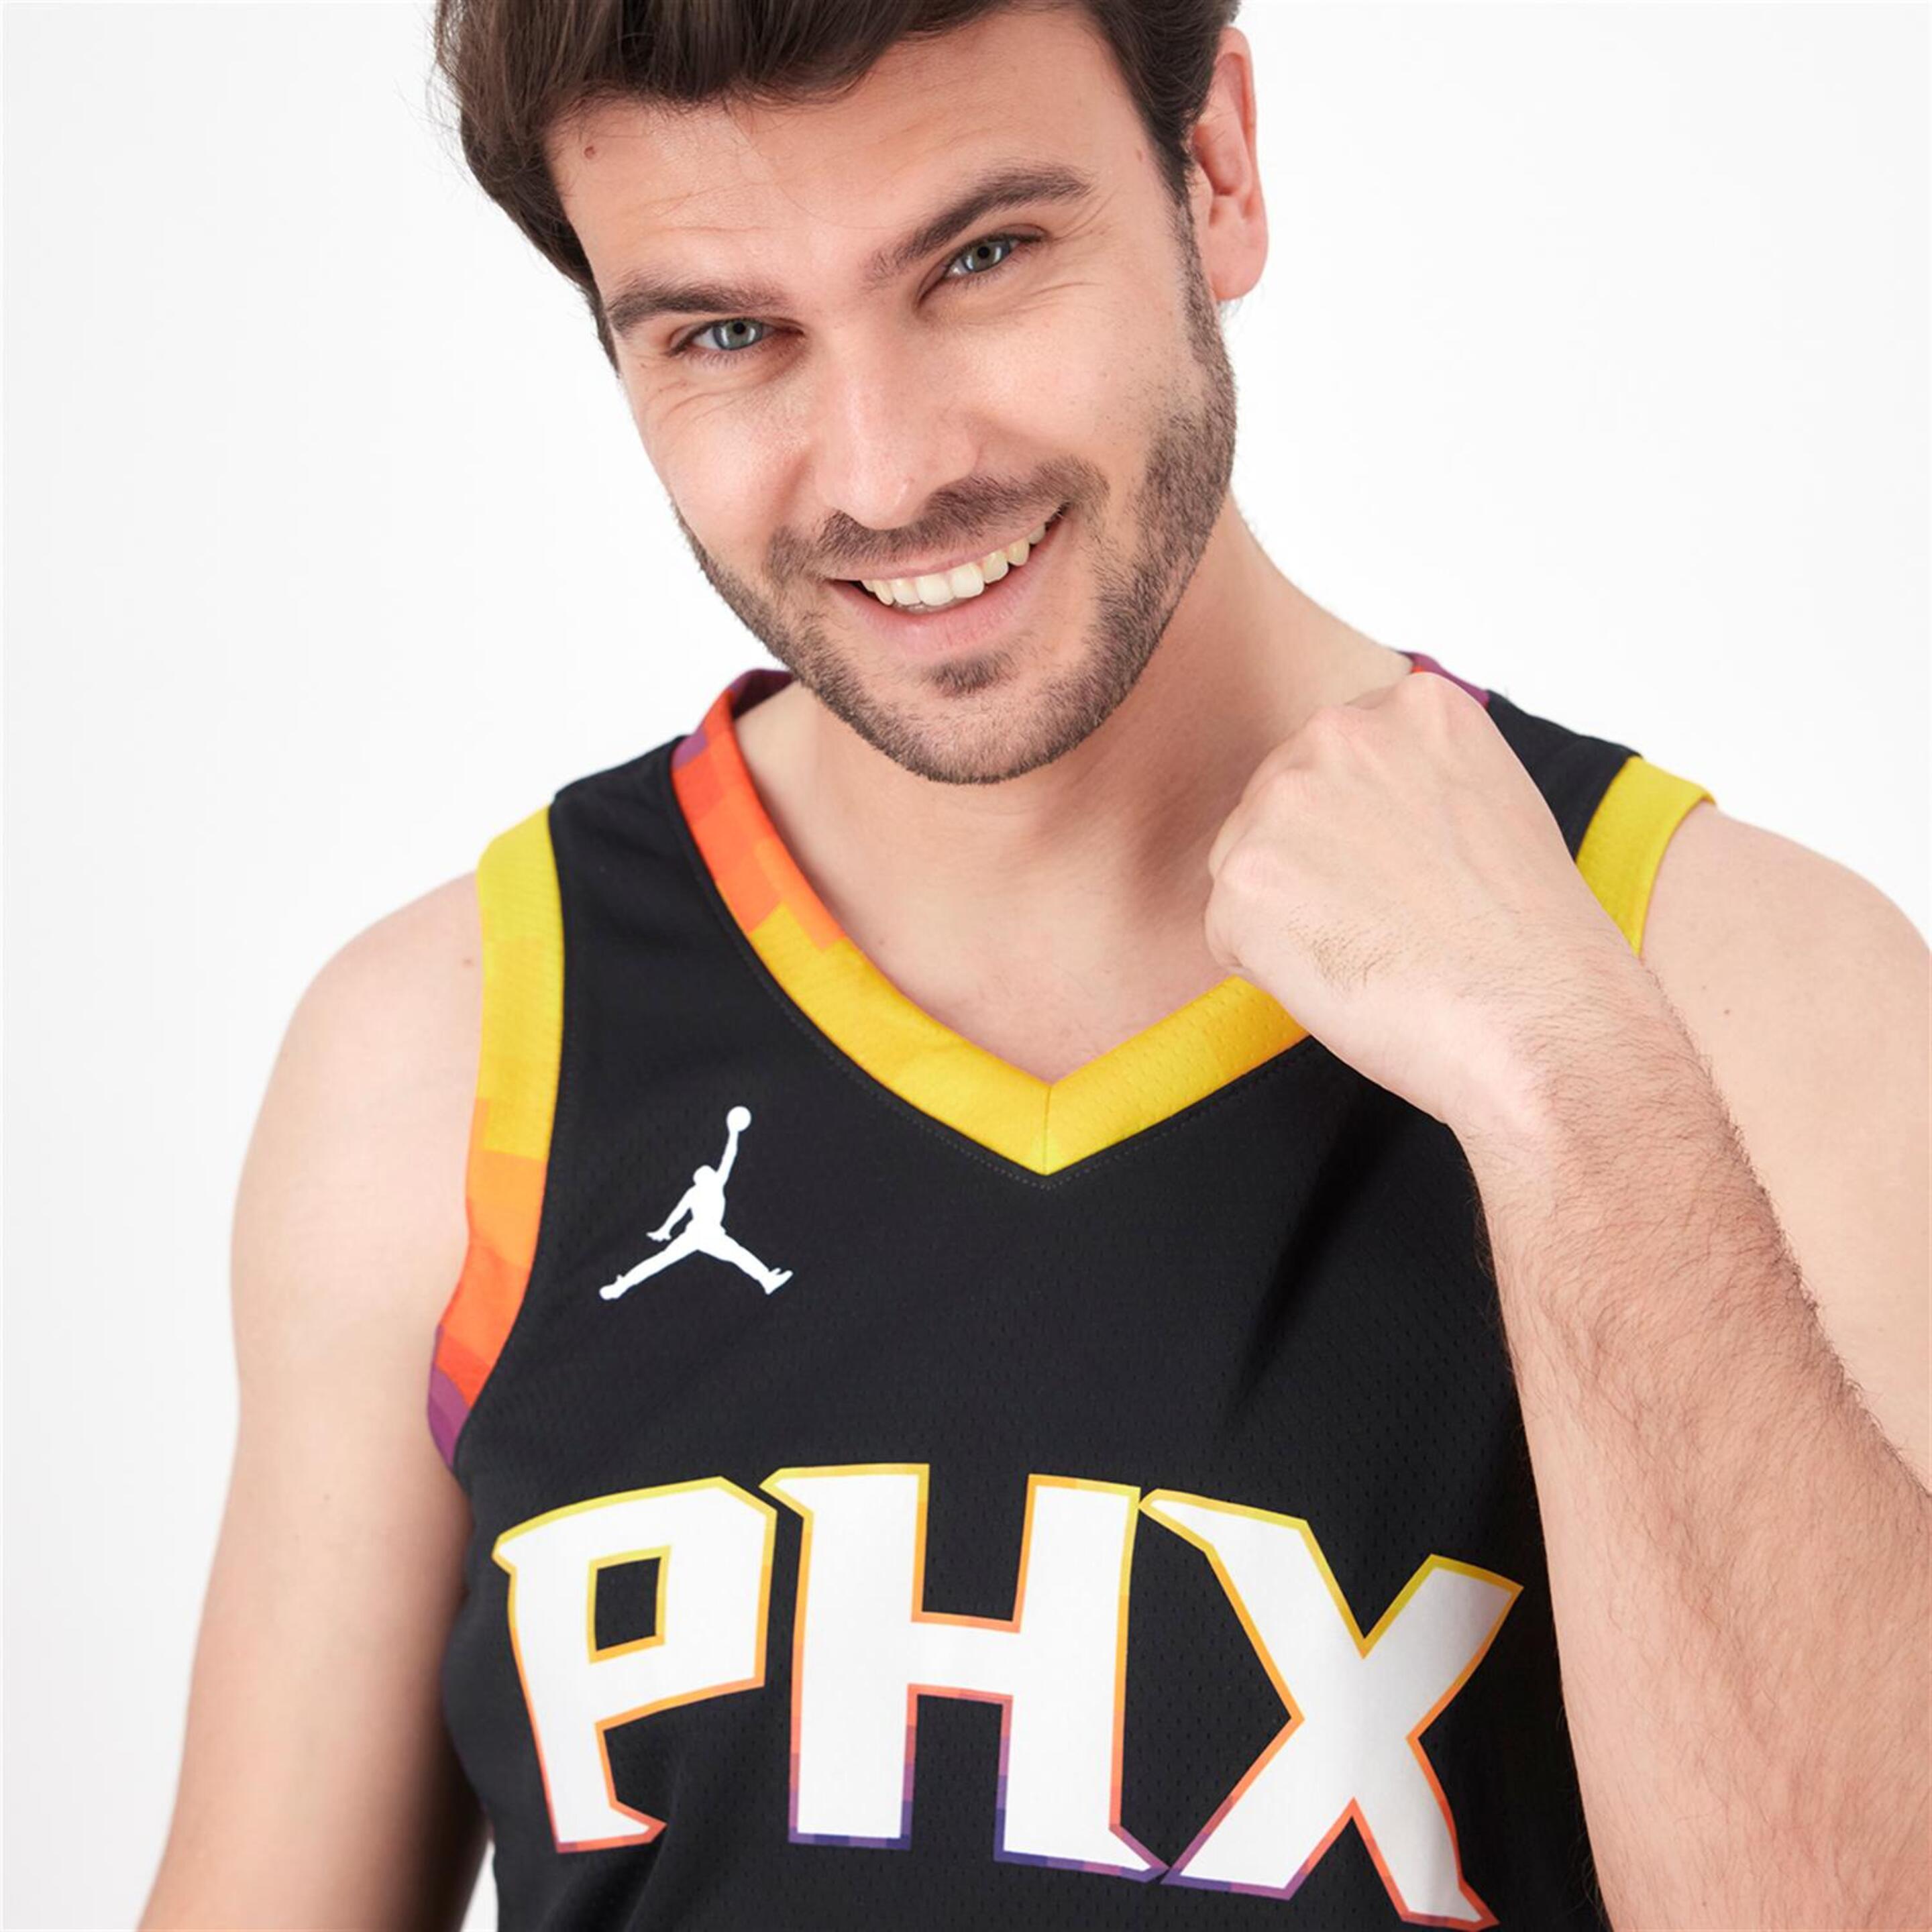 Nike Nba Phoenix Suns